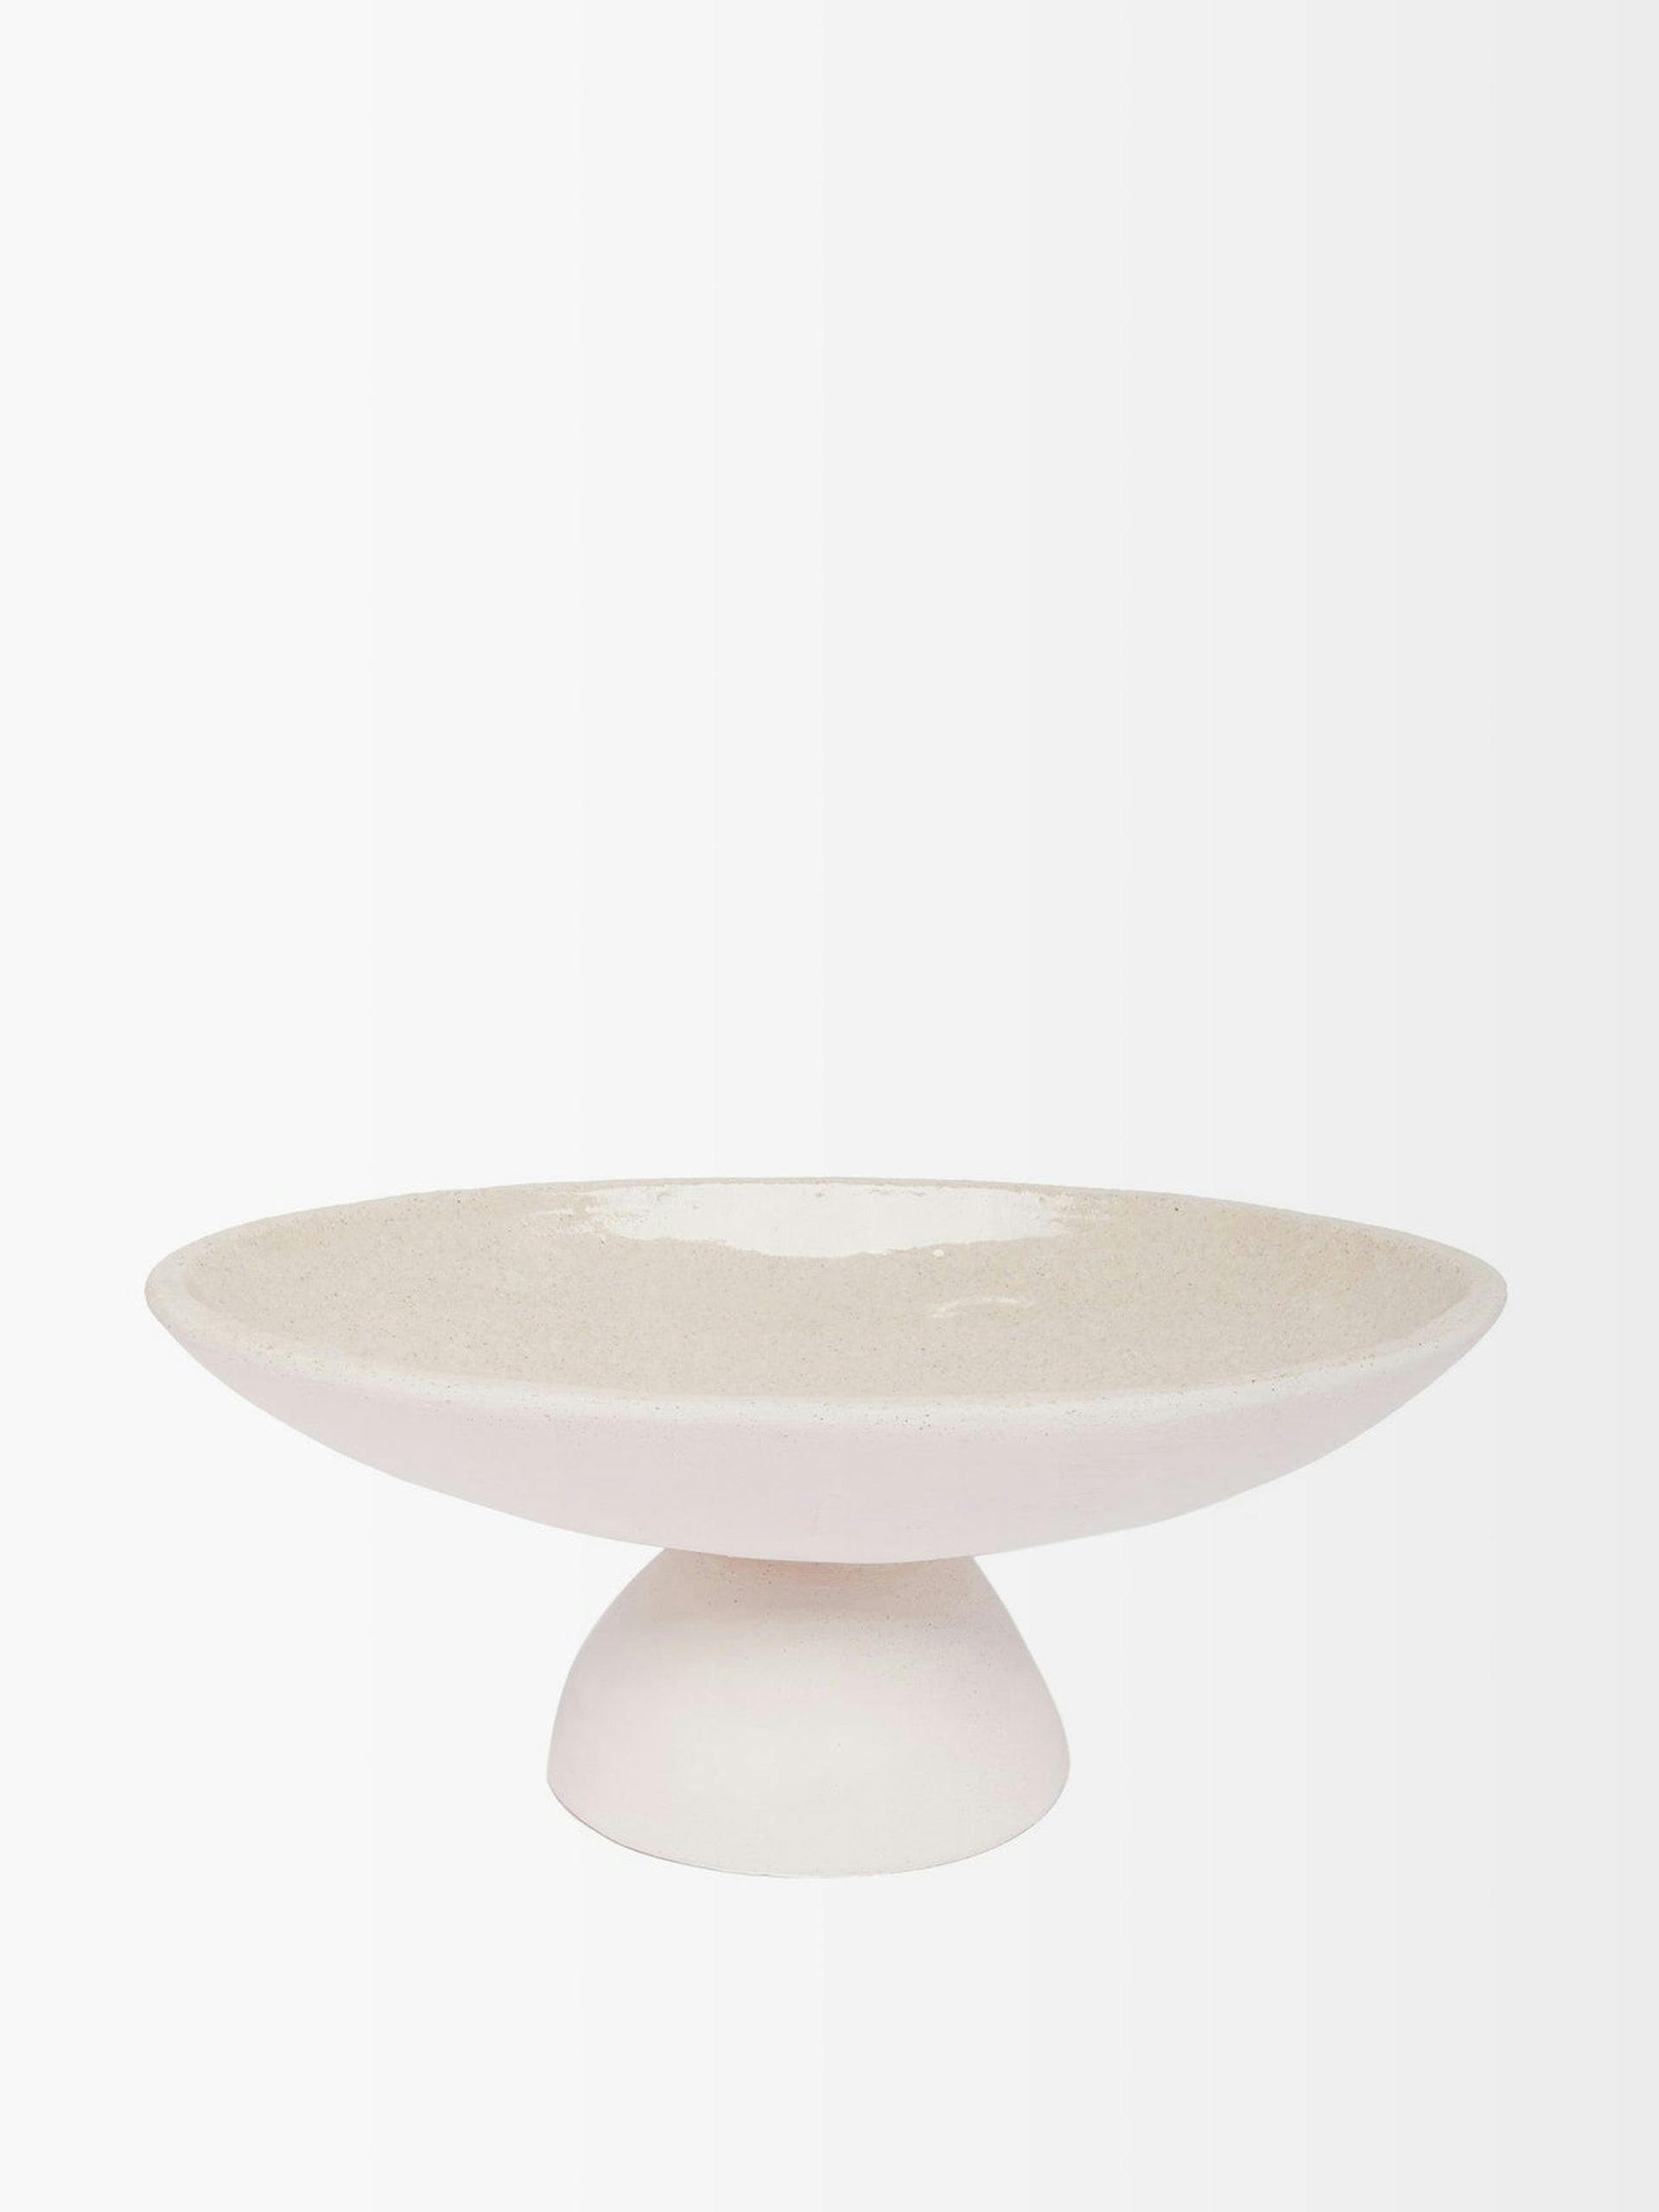 White ceramic serving plate